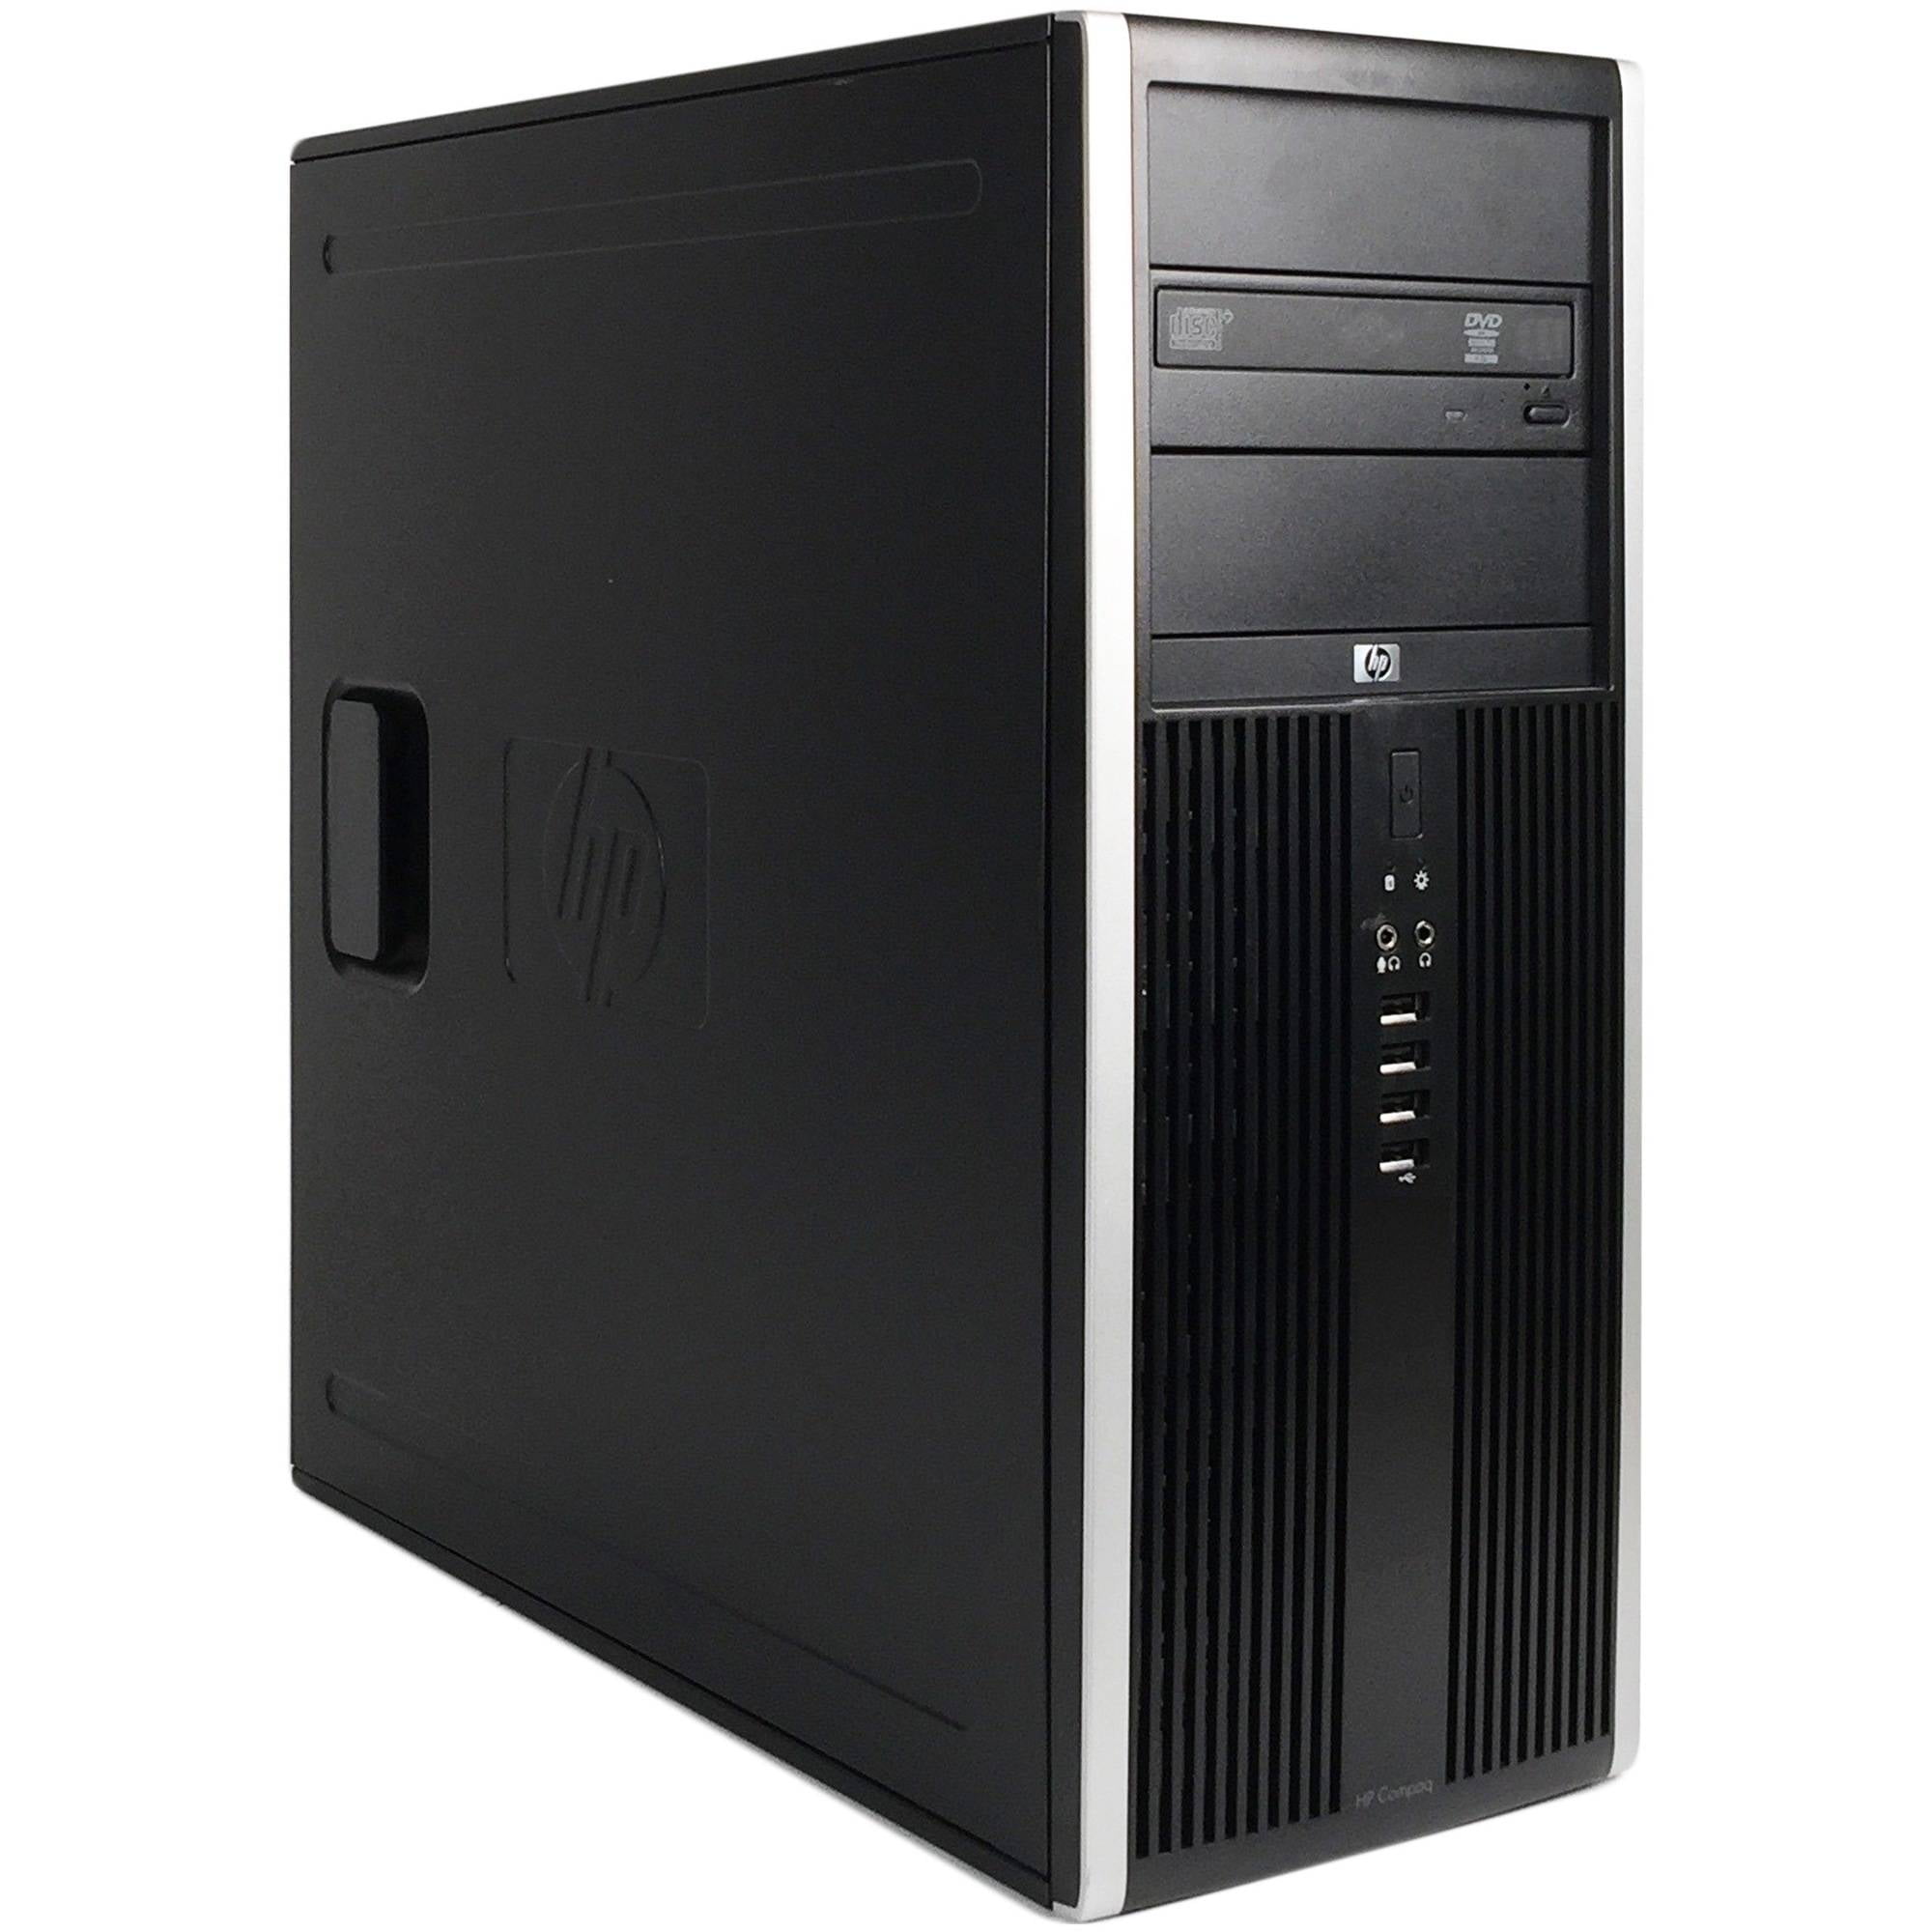 hp desktop computer 8200 intel core i5 2400 (3.10 ghz) 4 gb 250 gb hdd windows 7 professional